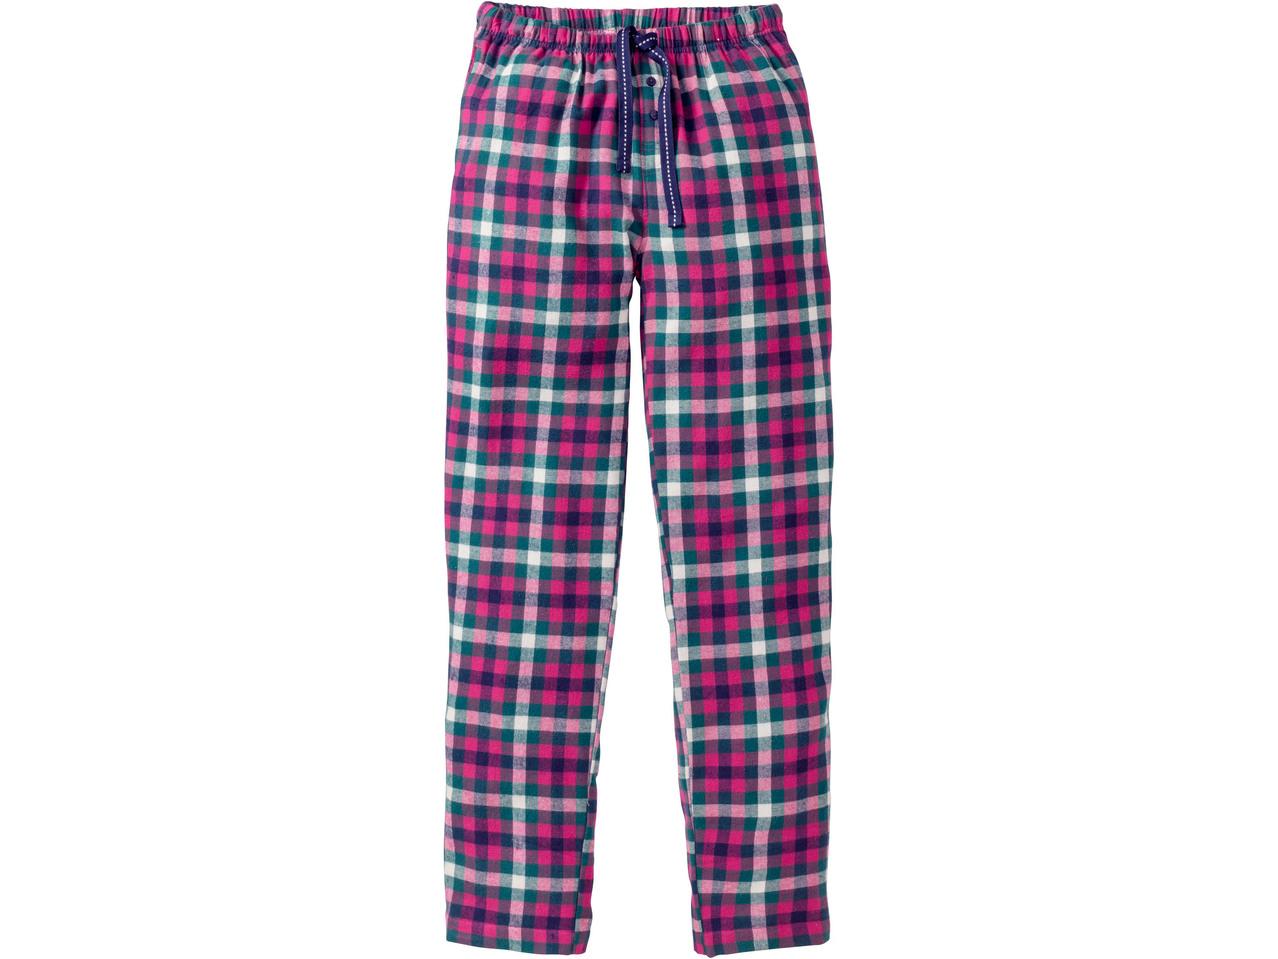 Ladies' Pyjama Bottoms